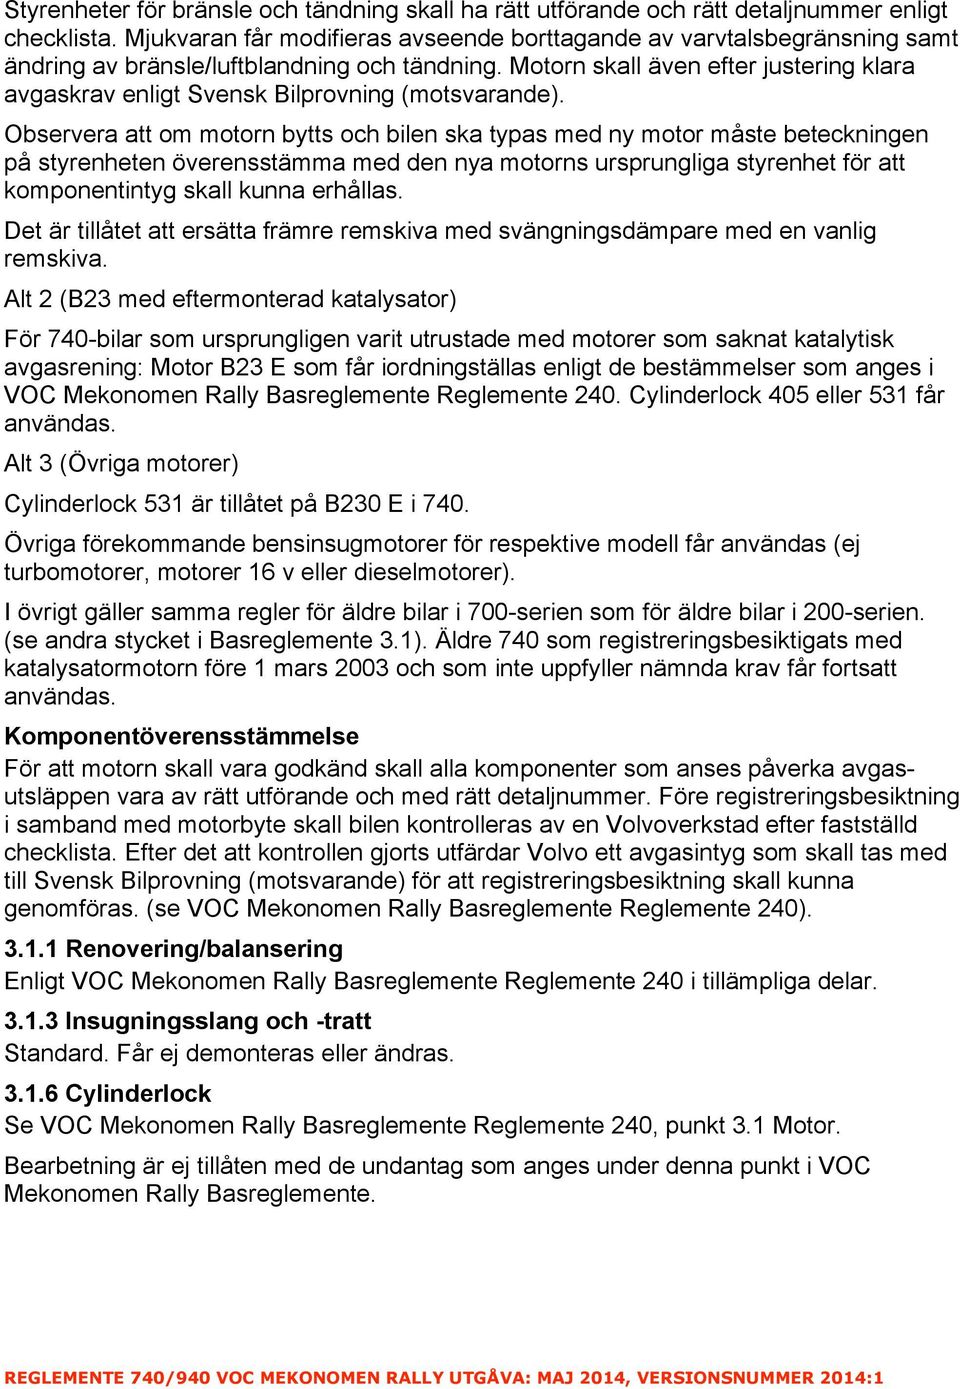 Tekniskt reglemente VOC Mekonomen Rally - PDF Free Download